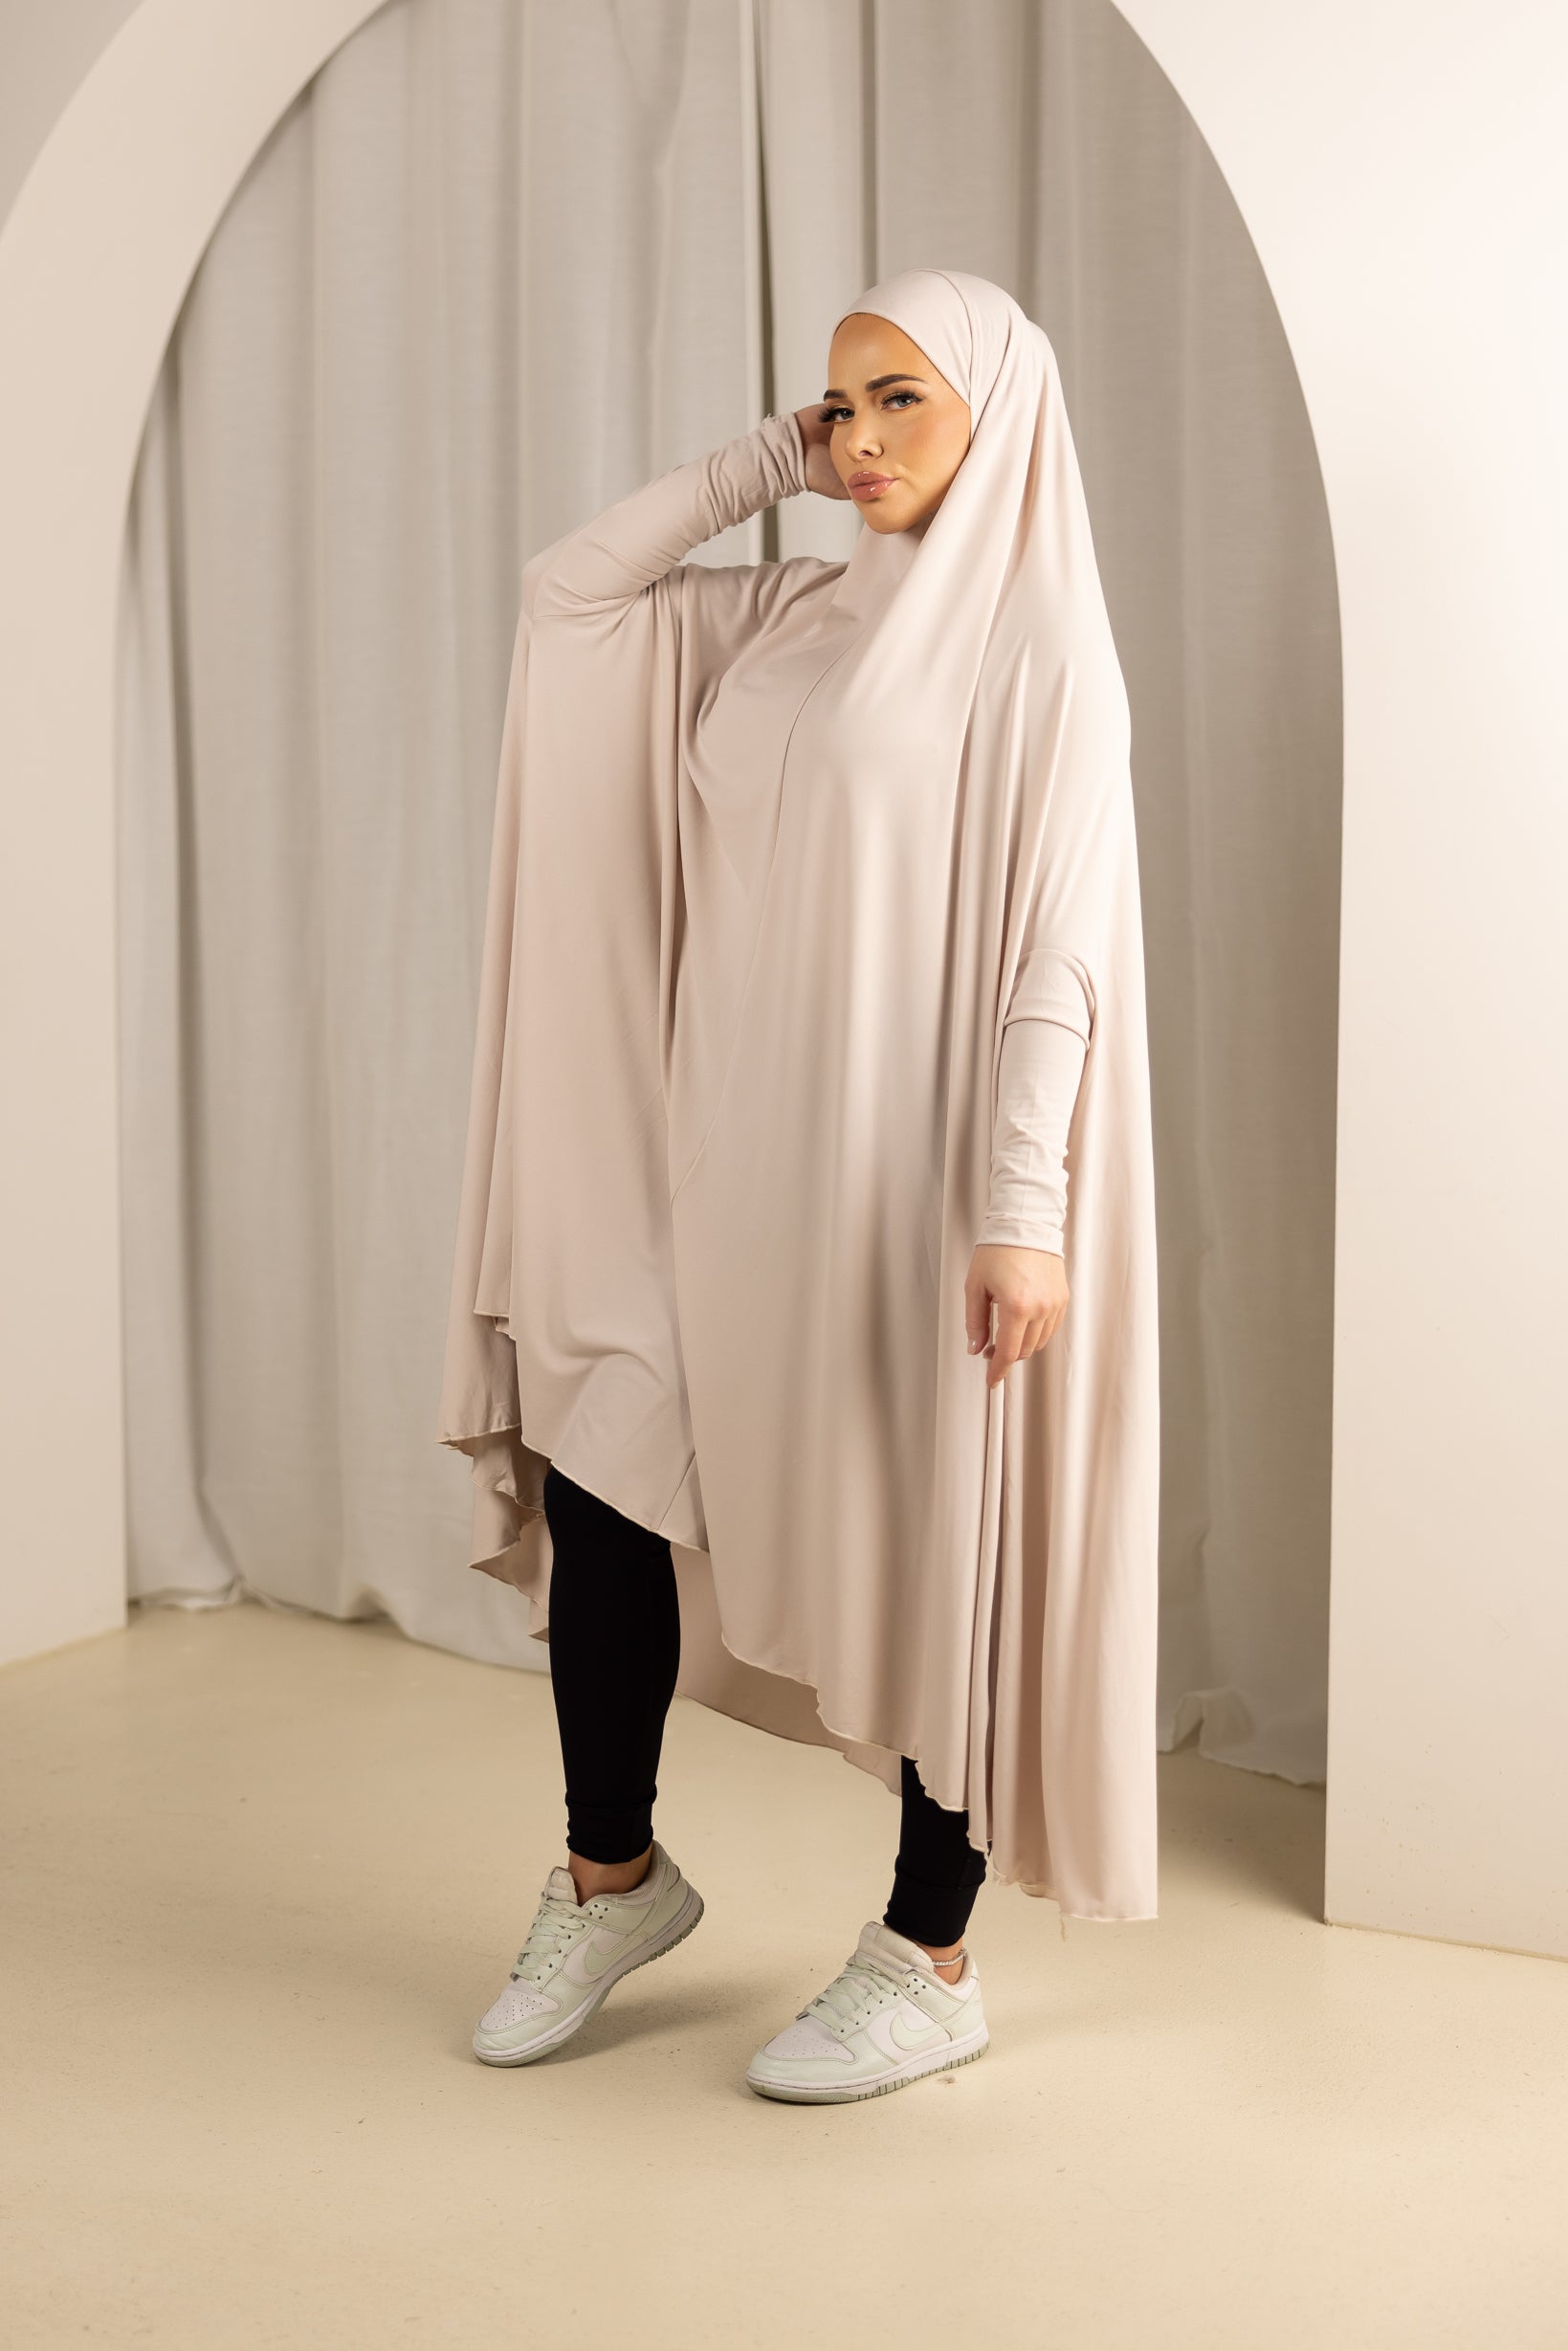 Sleeve Jilbab with Cap - Shades of Nude